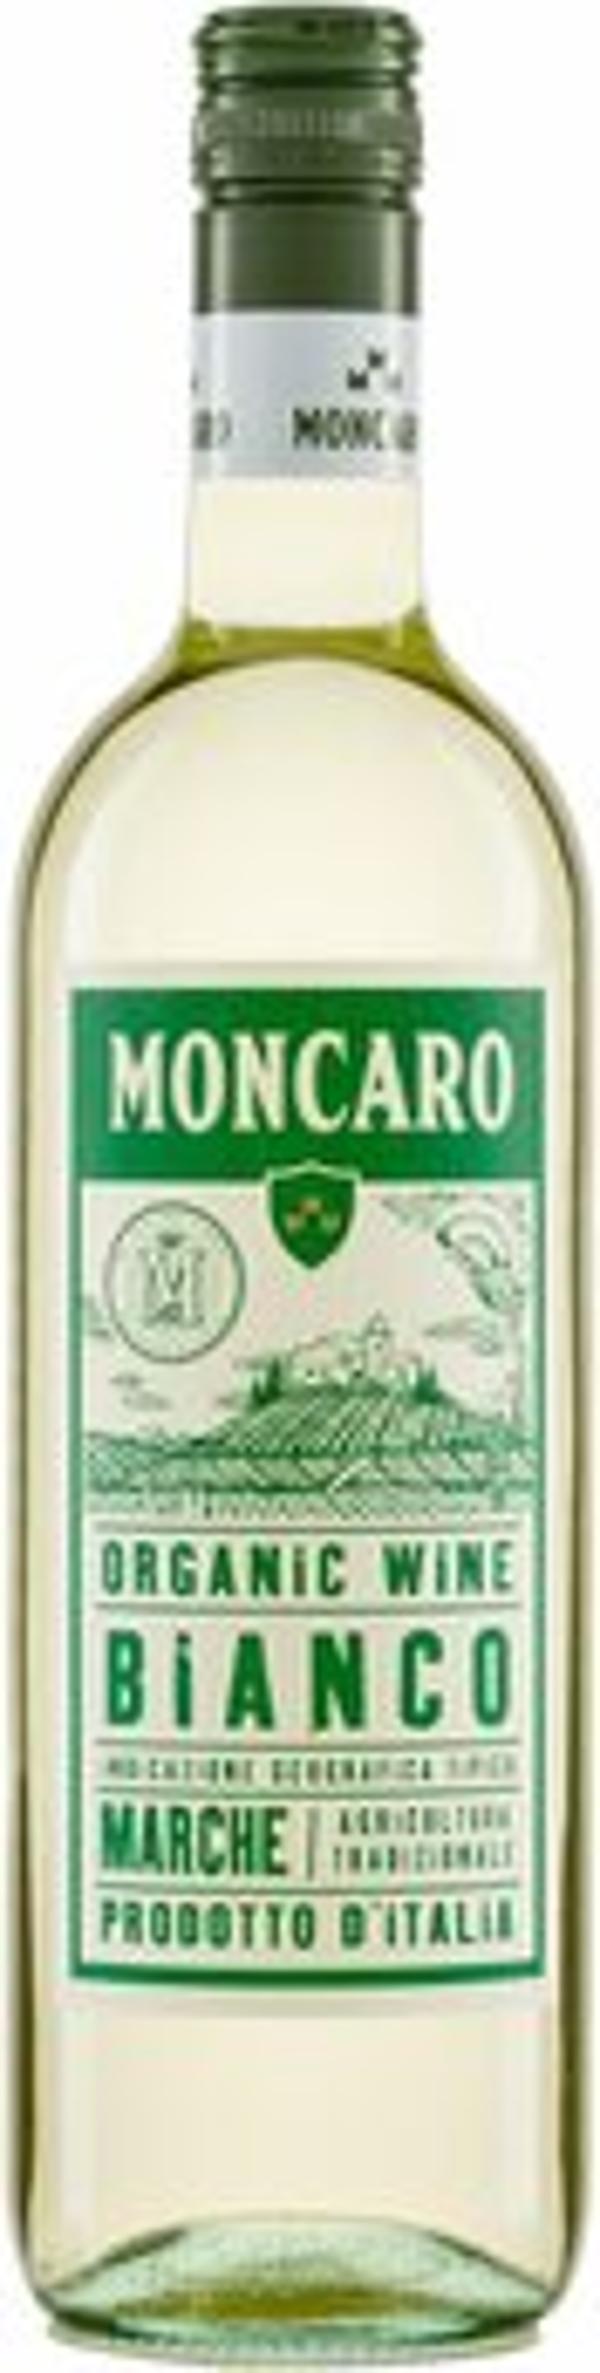 Produktfoto zu Marche Bianco IGT Moncaro